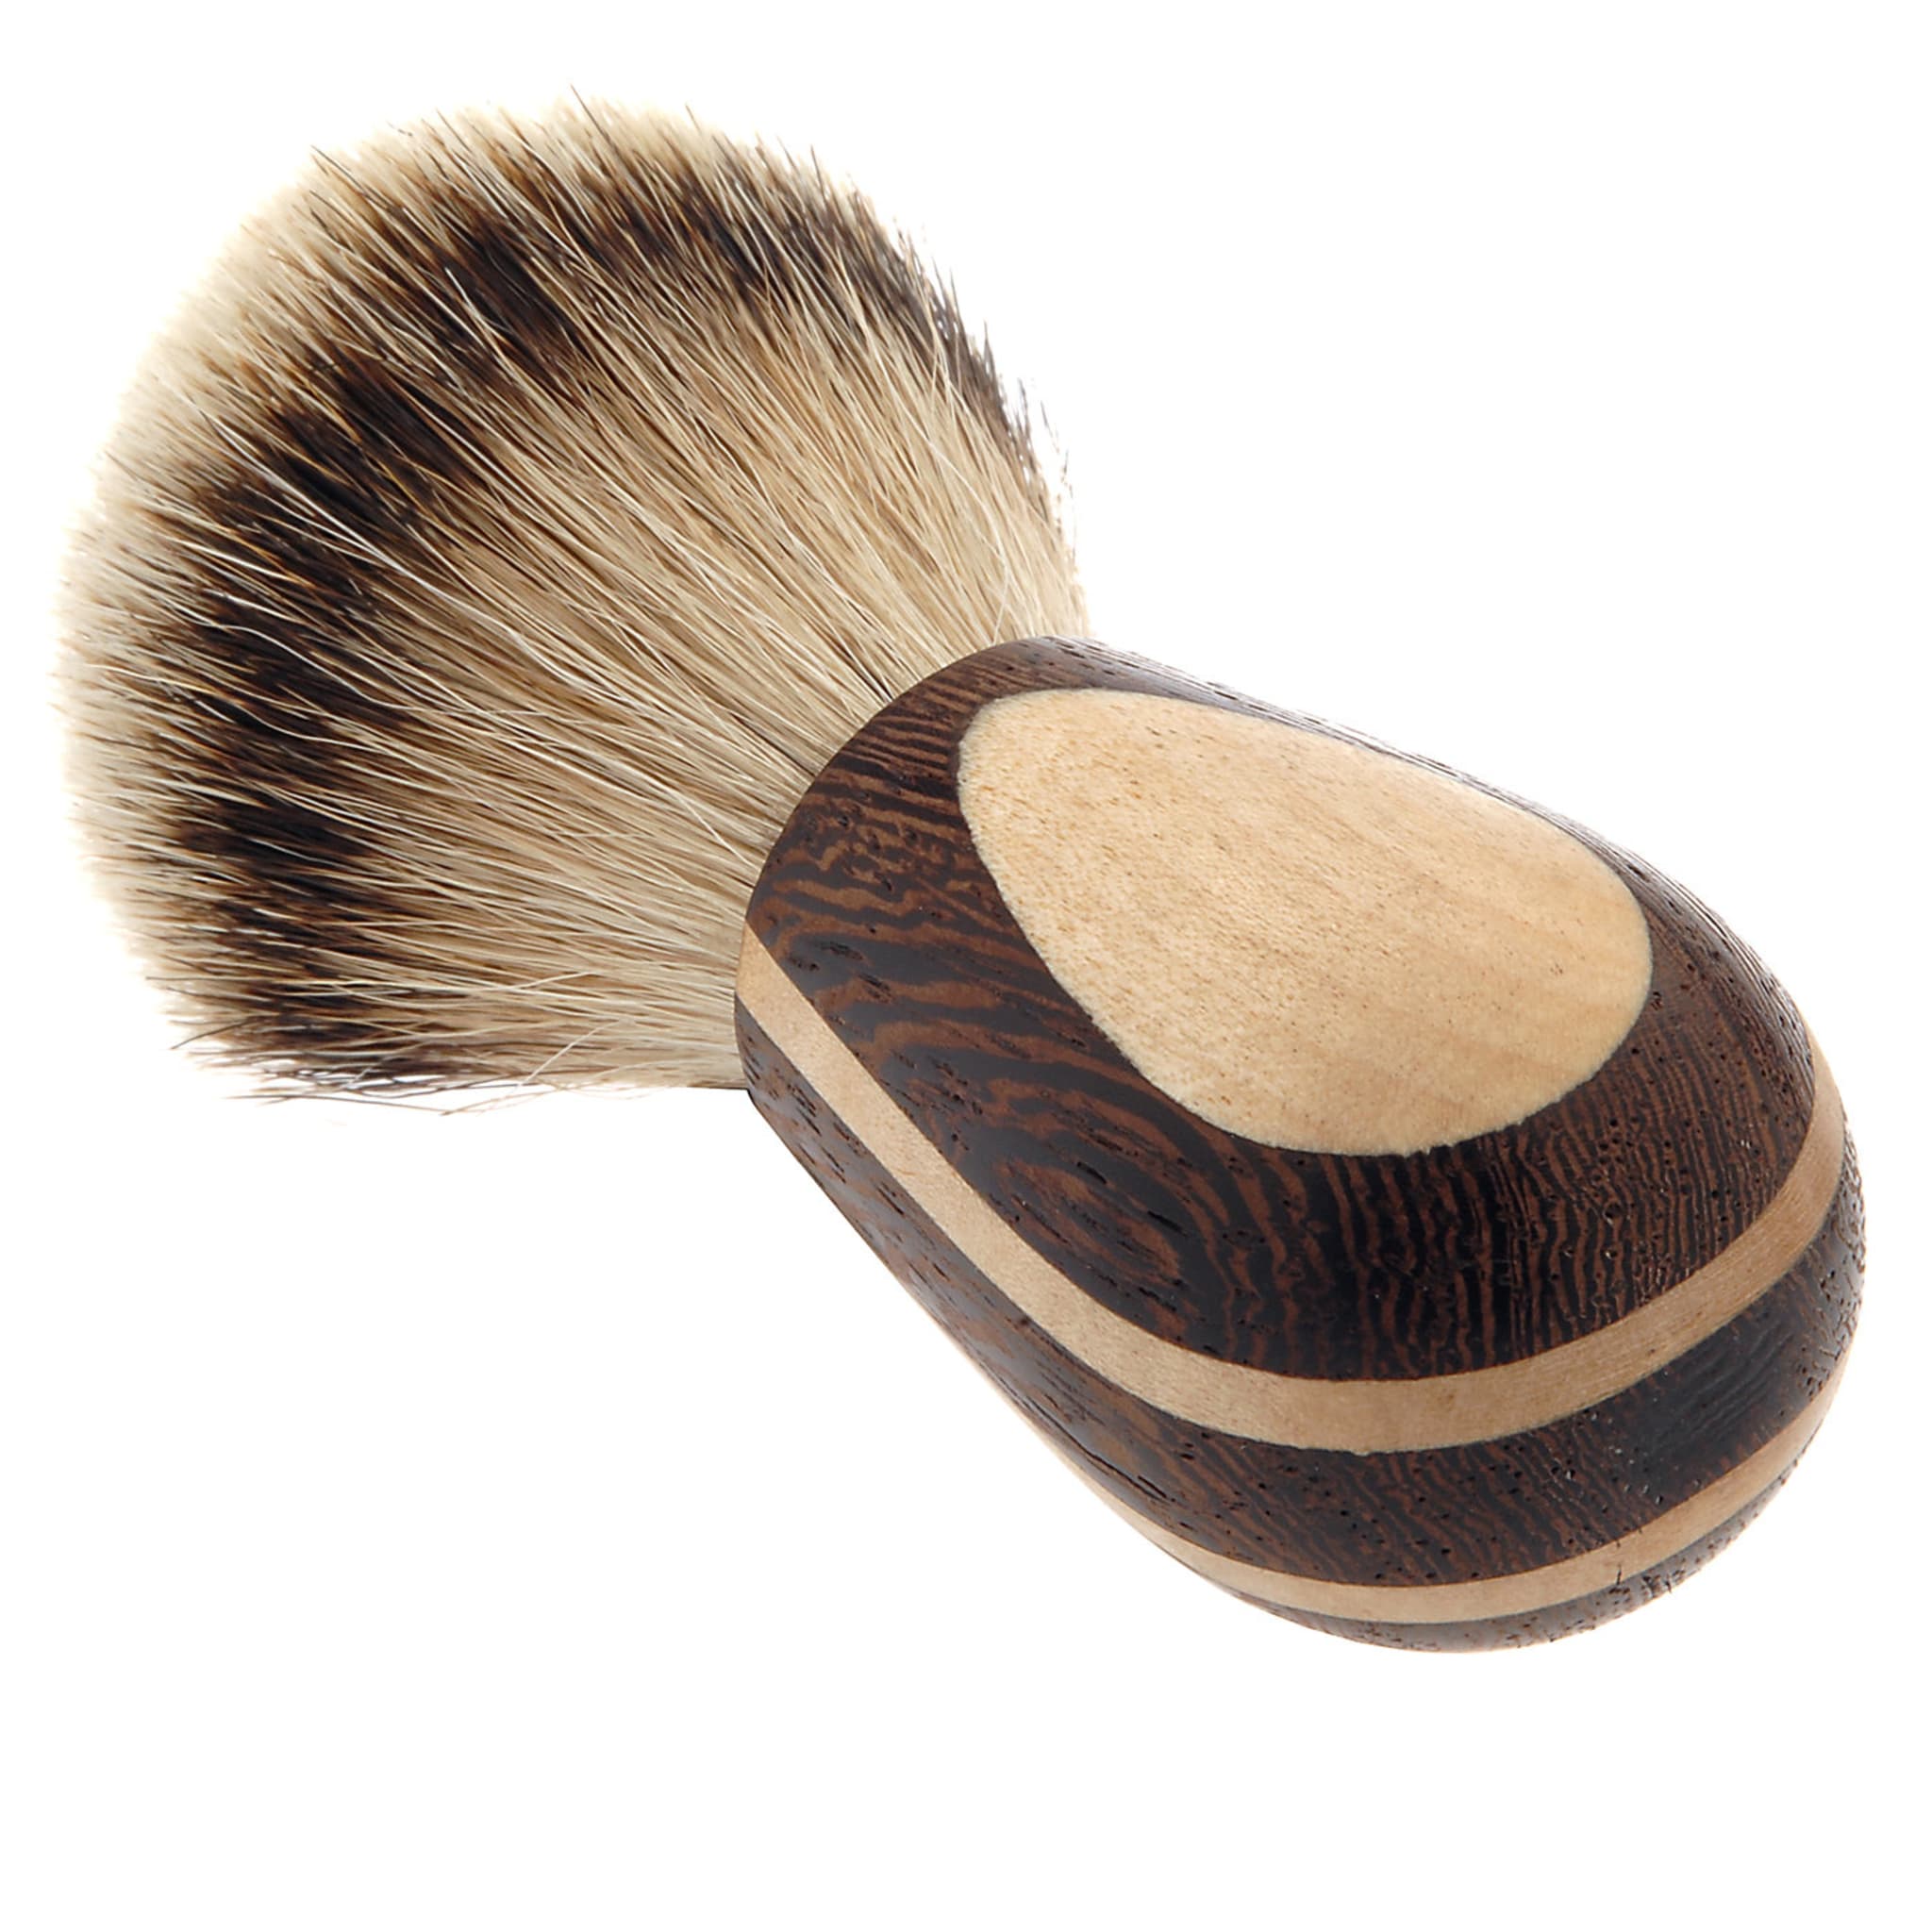 Shaving Brush in Wenge and Maple Wood - Alternative view 3